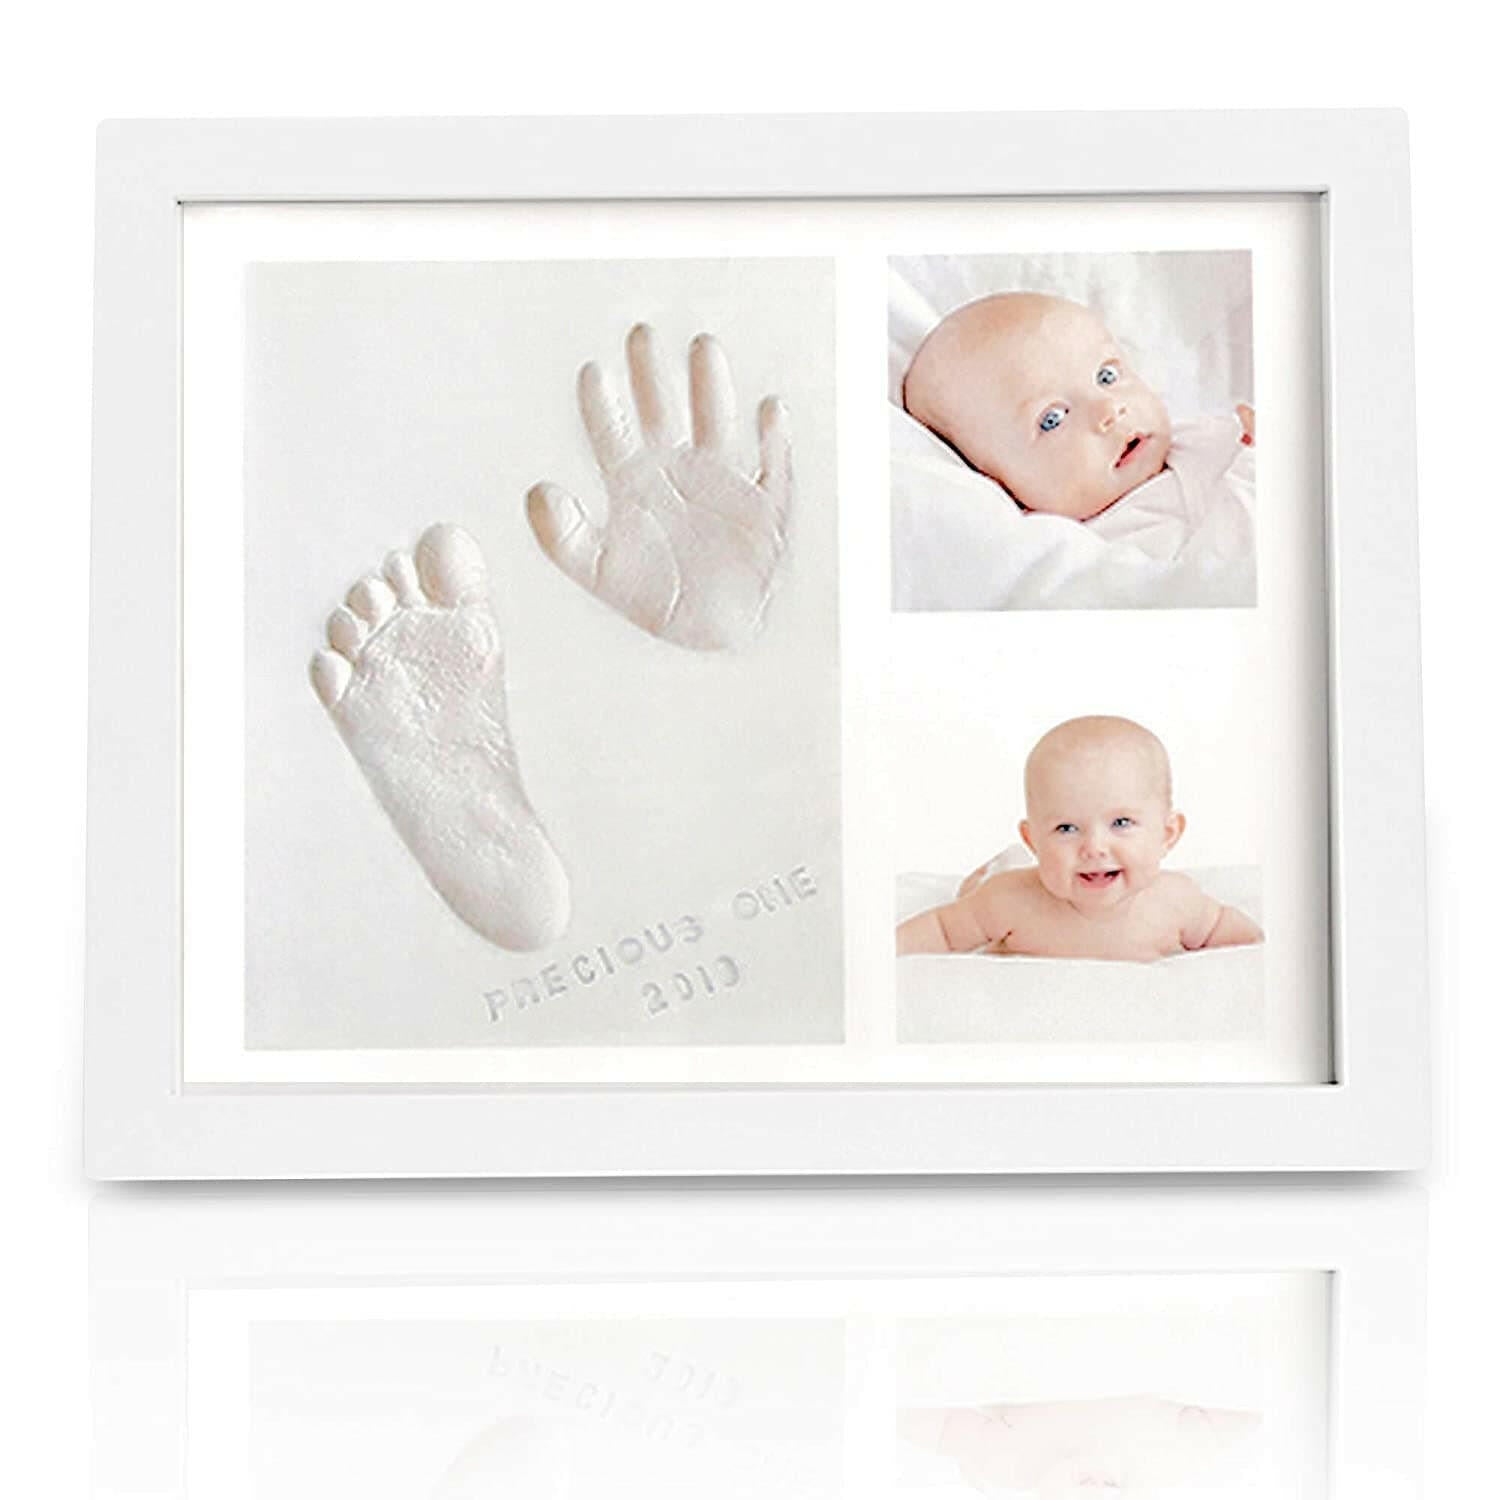 Baby Handprint Footprint Keepsake Kit - Baby Prints Photo Frame for Newborn.